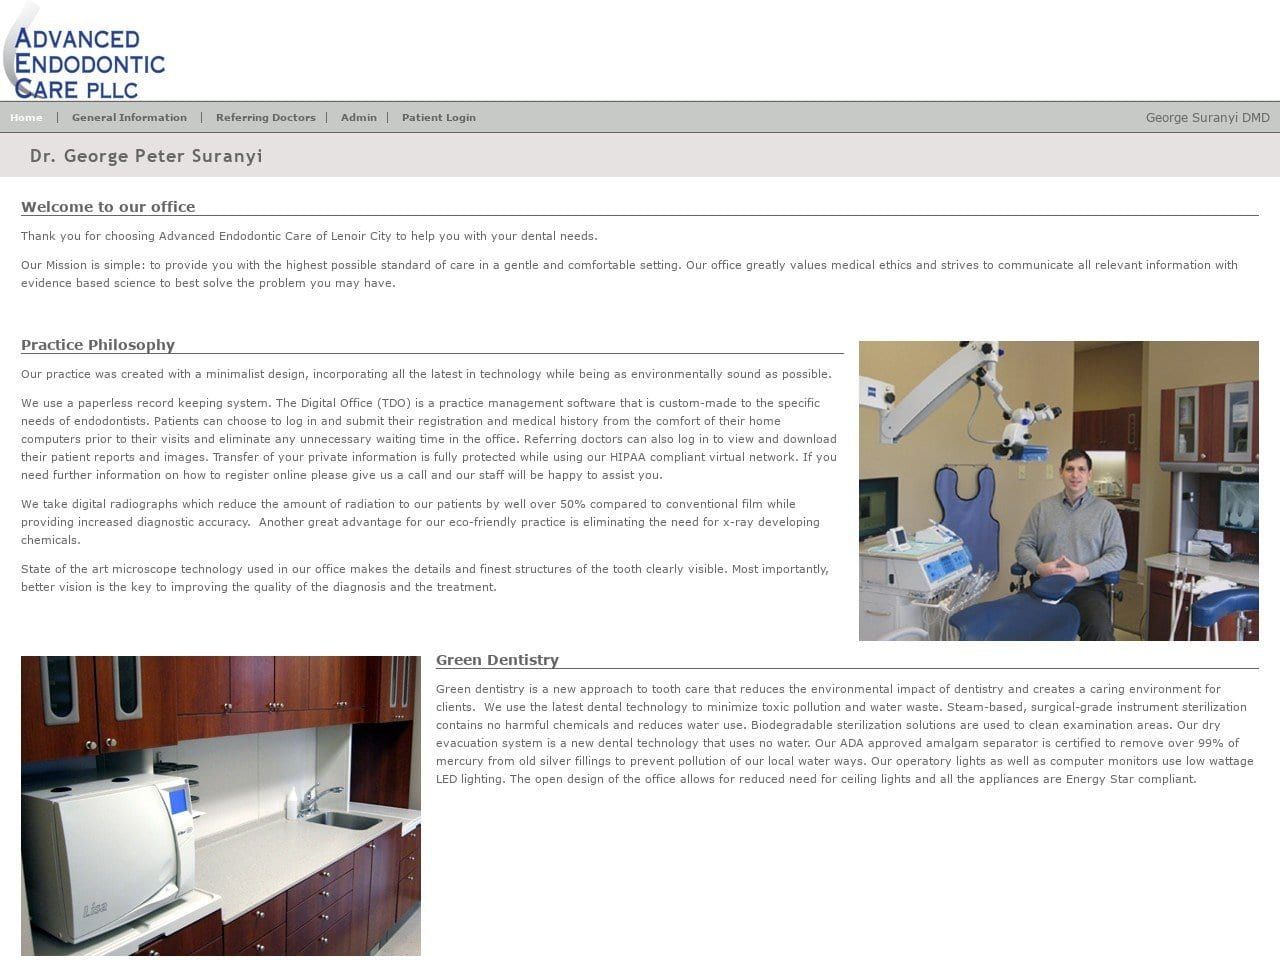 Advanced Endodontic Care Pllc Dr. George P. Surany Website Screenshot from suranyi-endo.com